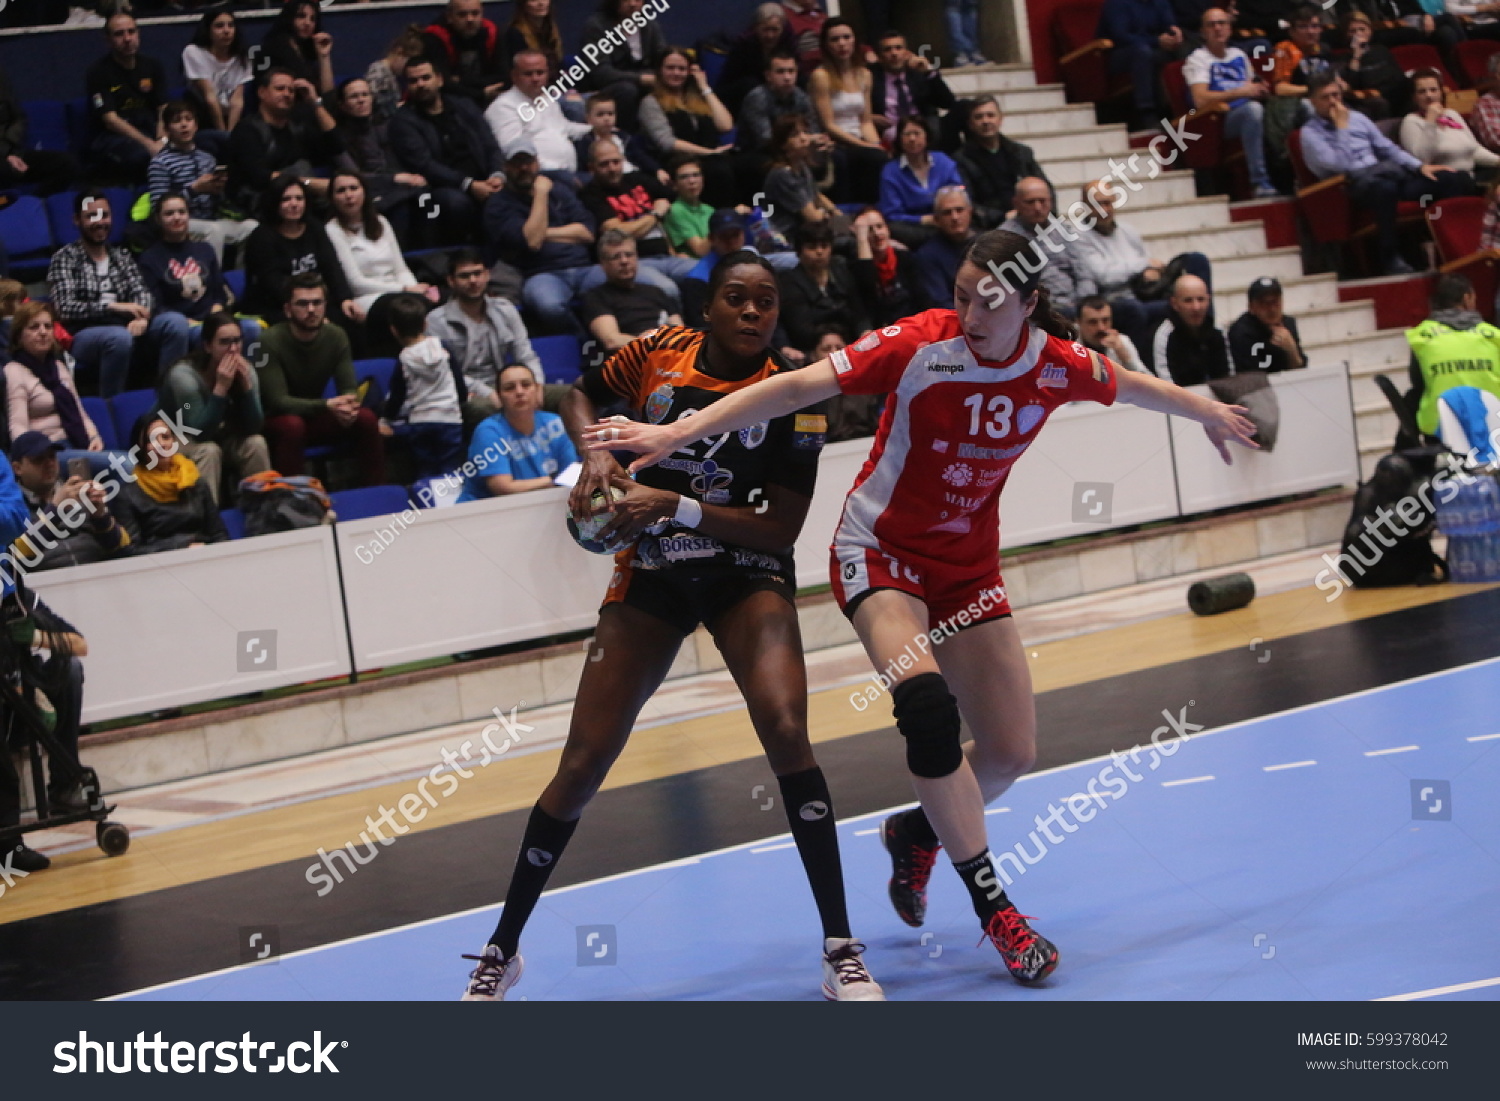 BUCHAREST, ROMANIA - MARCH 03, 2017: WOMEN'S EHF Champions League 2016-17, CSM Bucuresti vs RK Krim Mercator handball game.